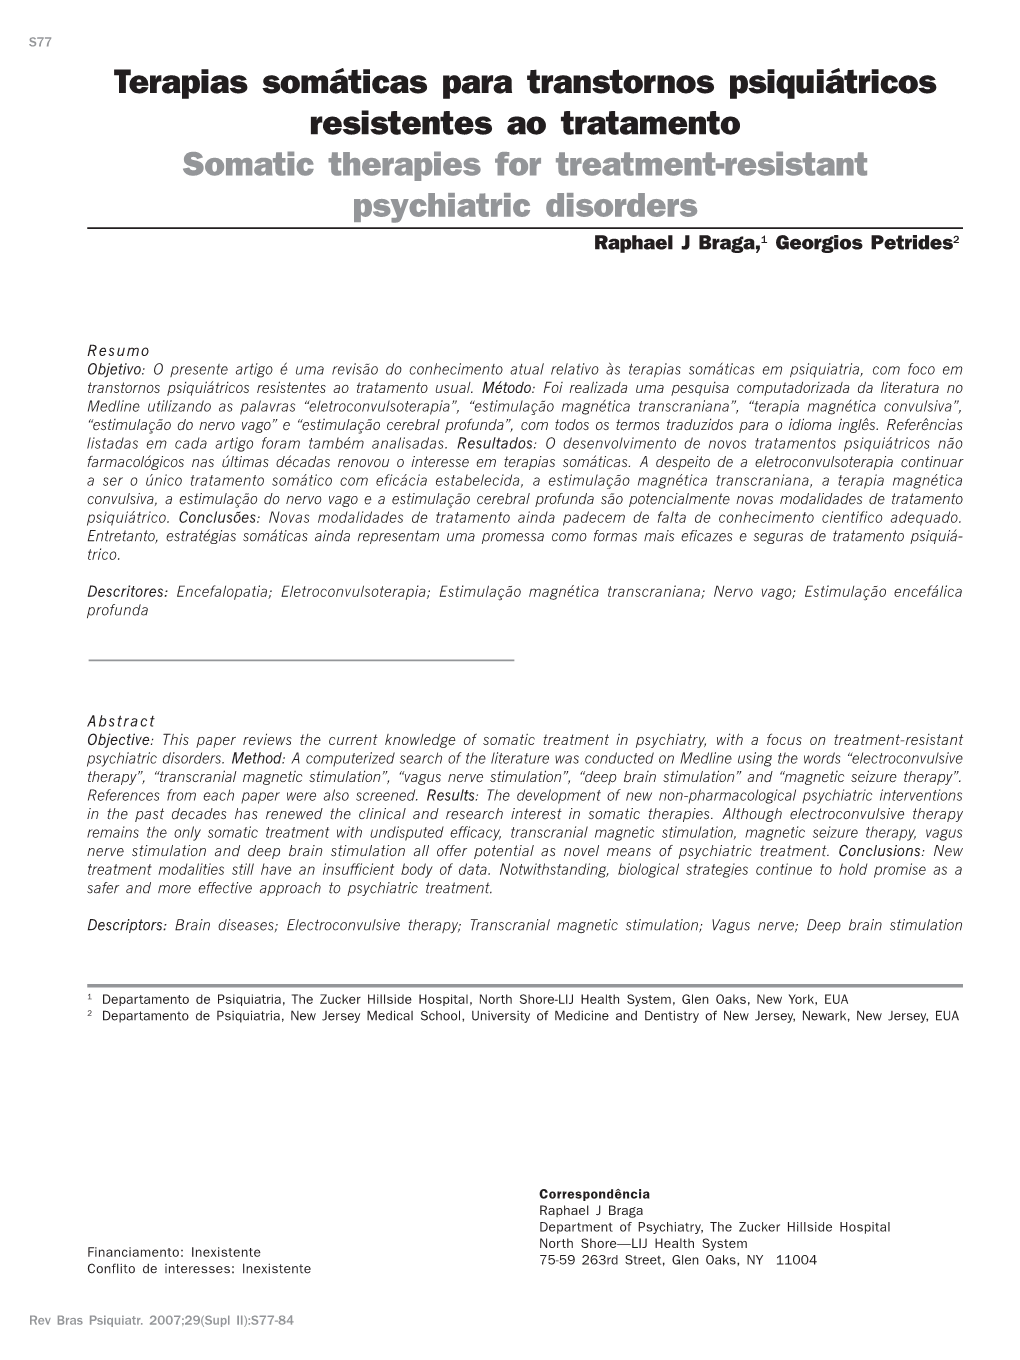 Somatic Therapies for Treatment-Resistant Psychiatric Disorders Raphael J Braga,1 Georgios Petrides2